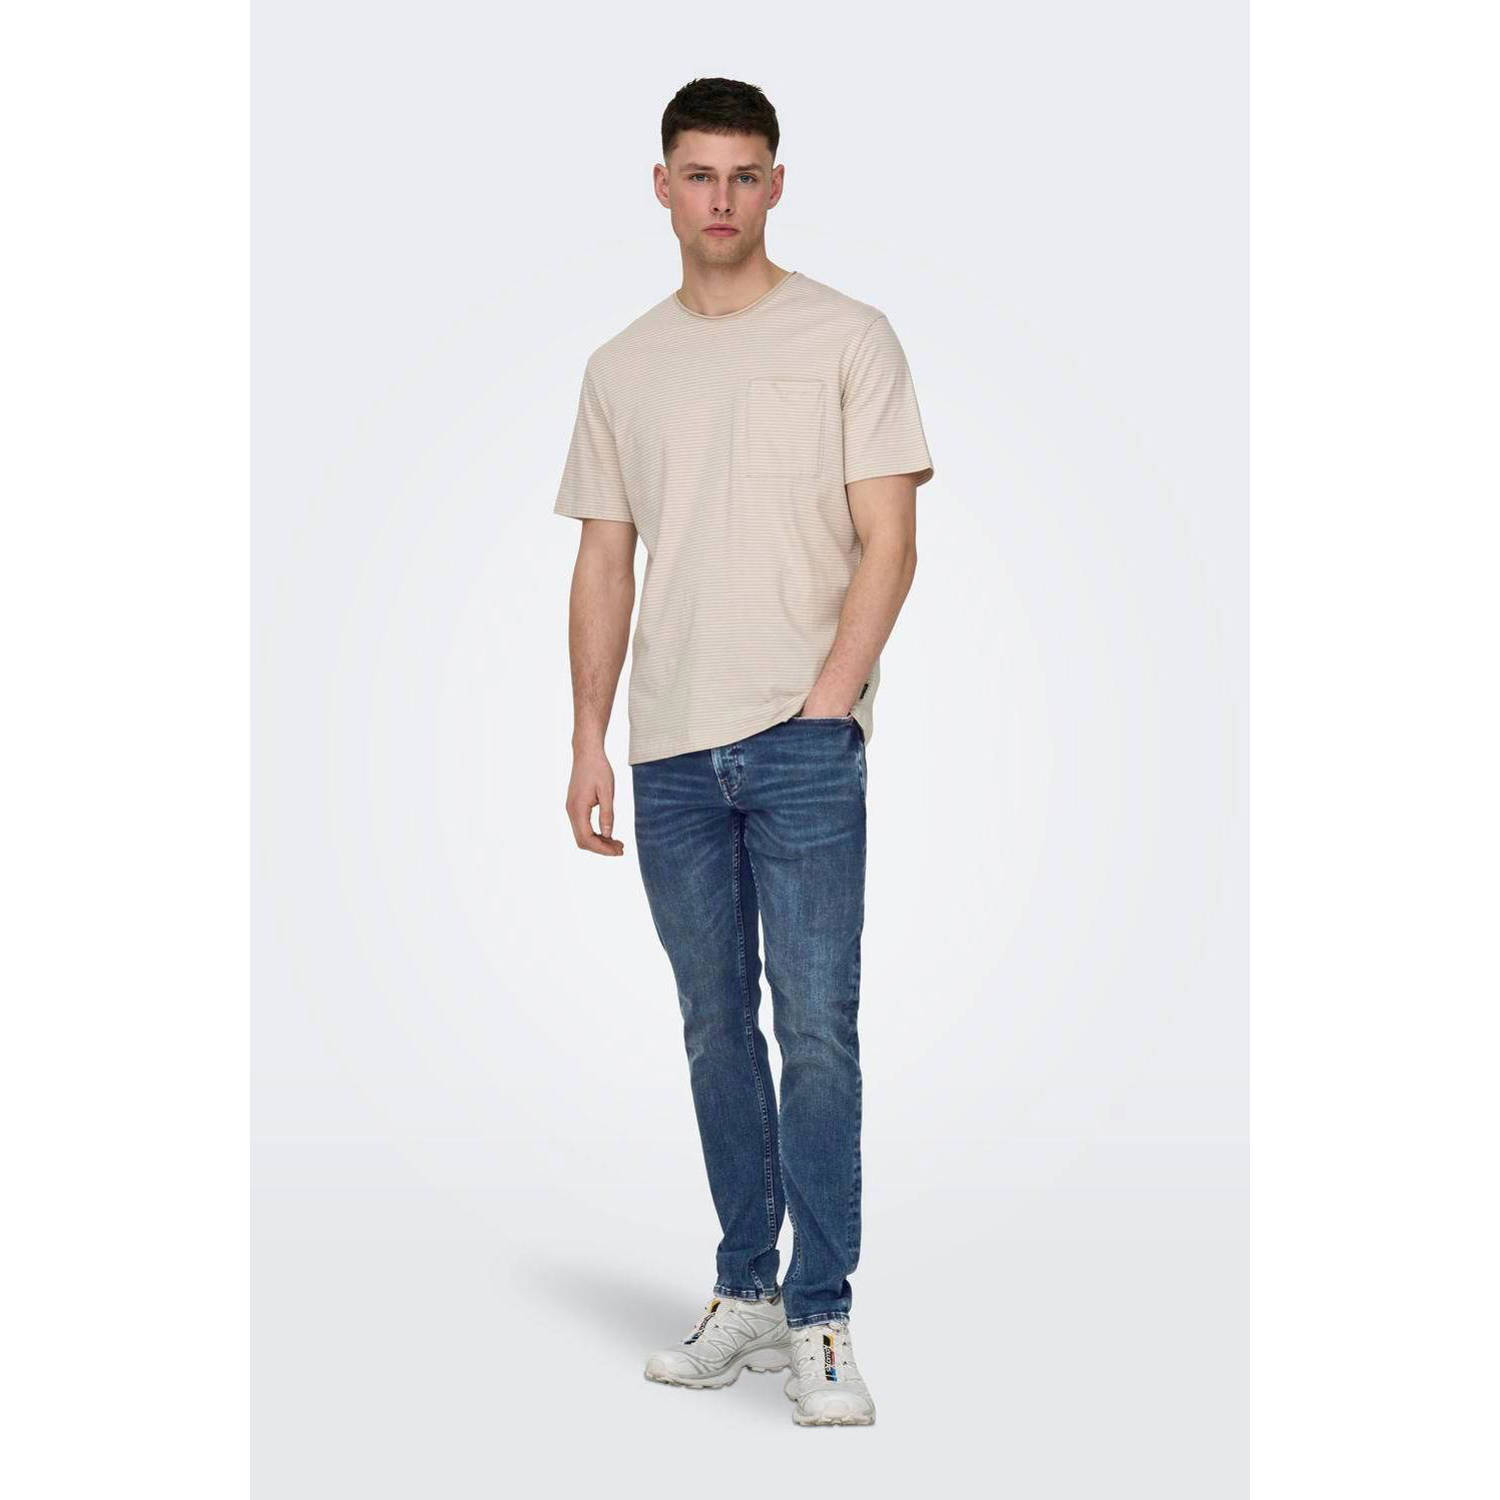 ONLY & SONS skinny jeans ONSWARP 9092 medium blue denim